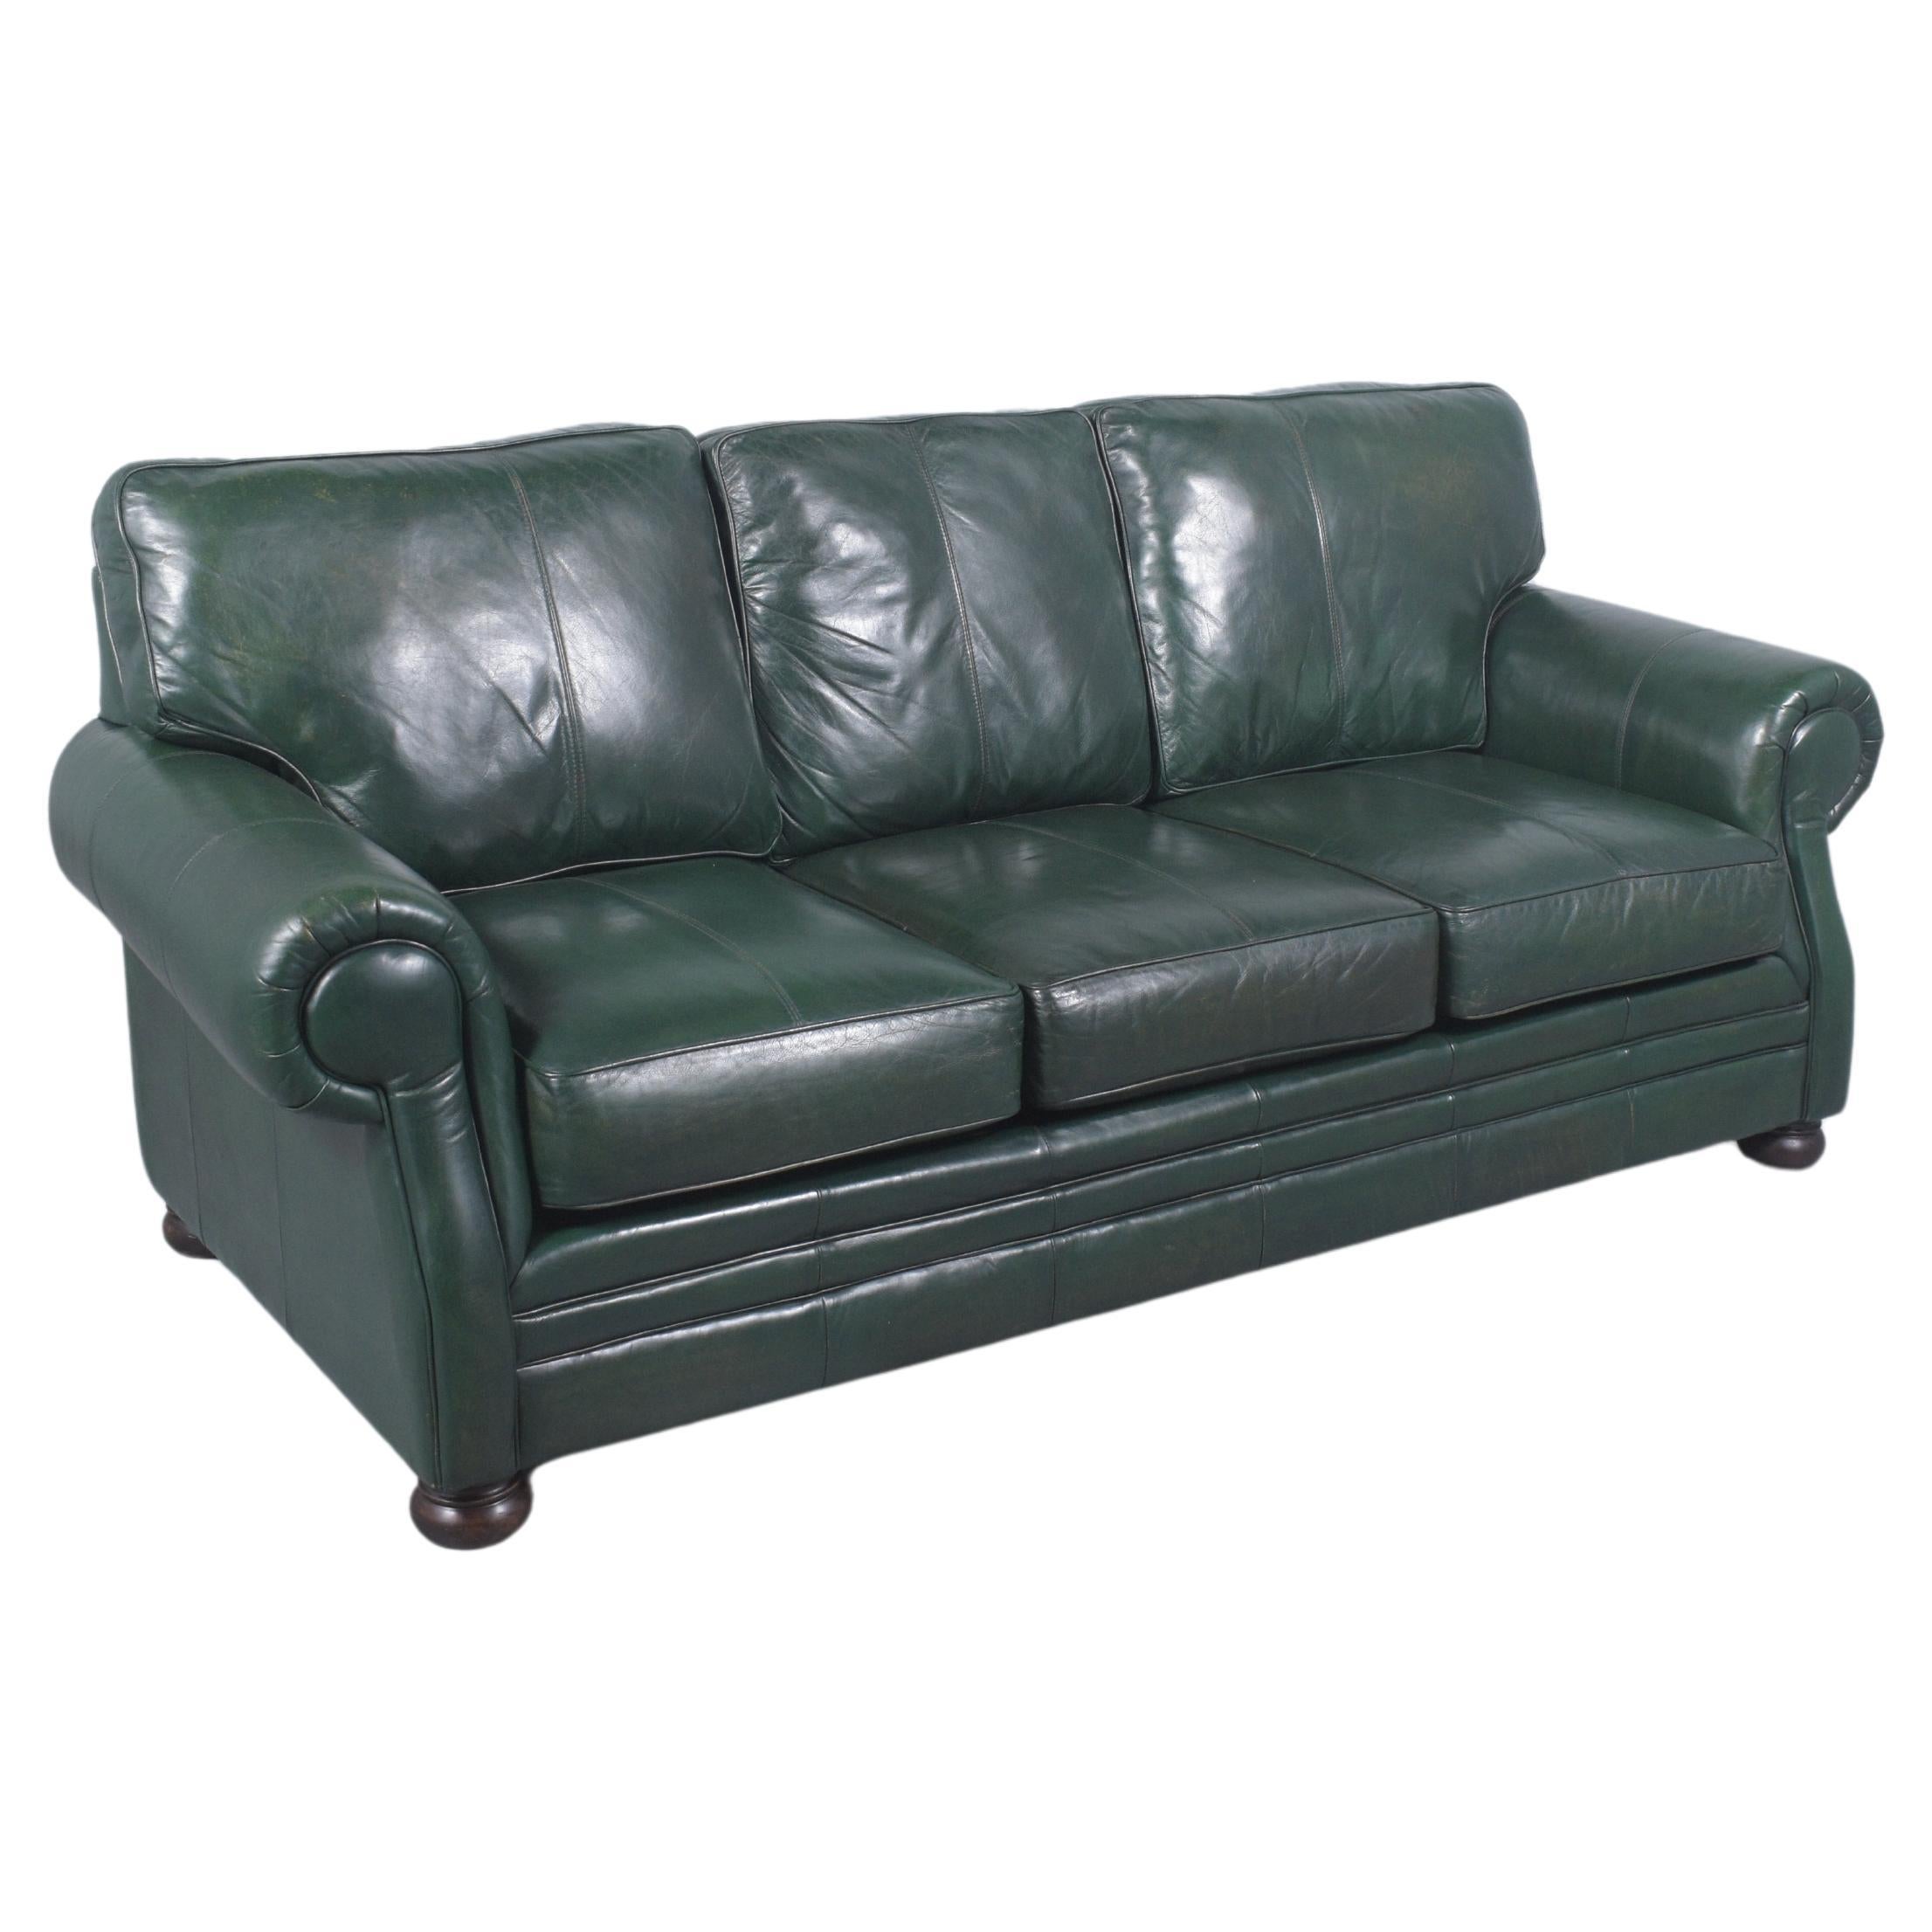 Elegant 1980s Restored Leather Sofa: A Blend of Vintage and Modern For Sale